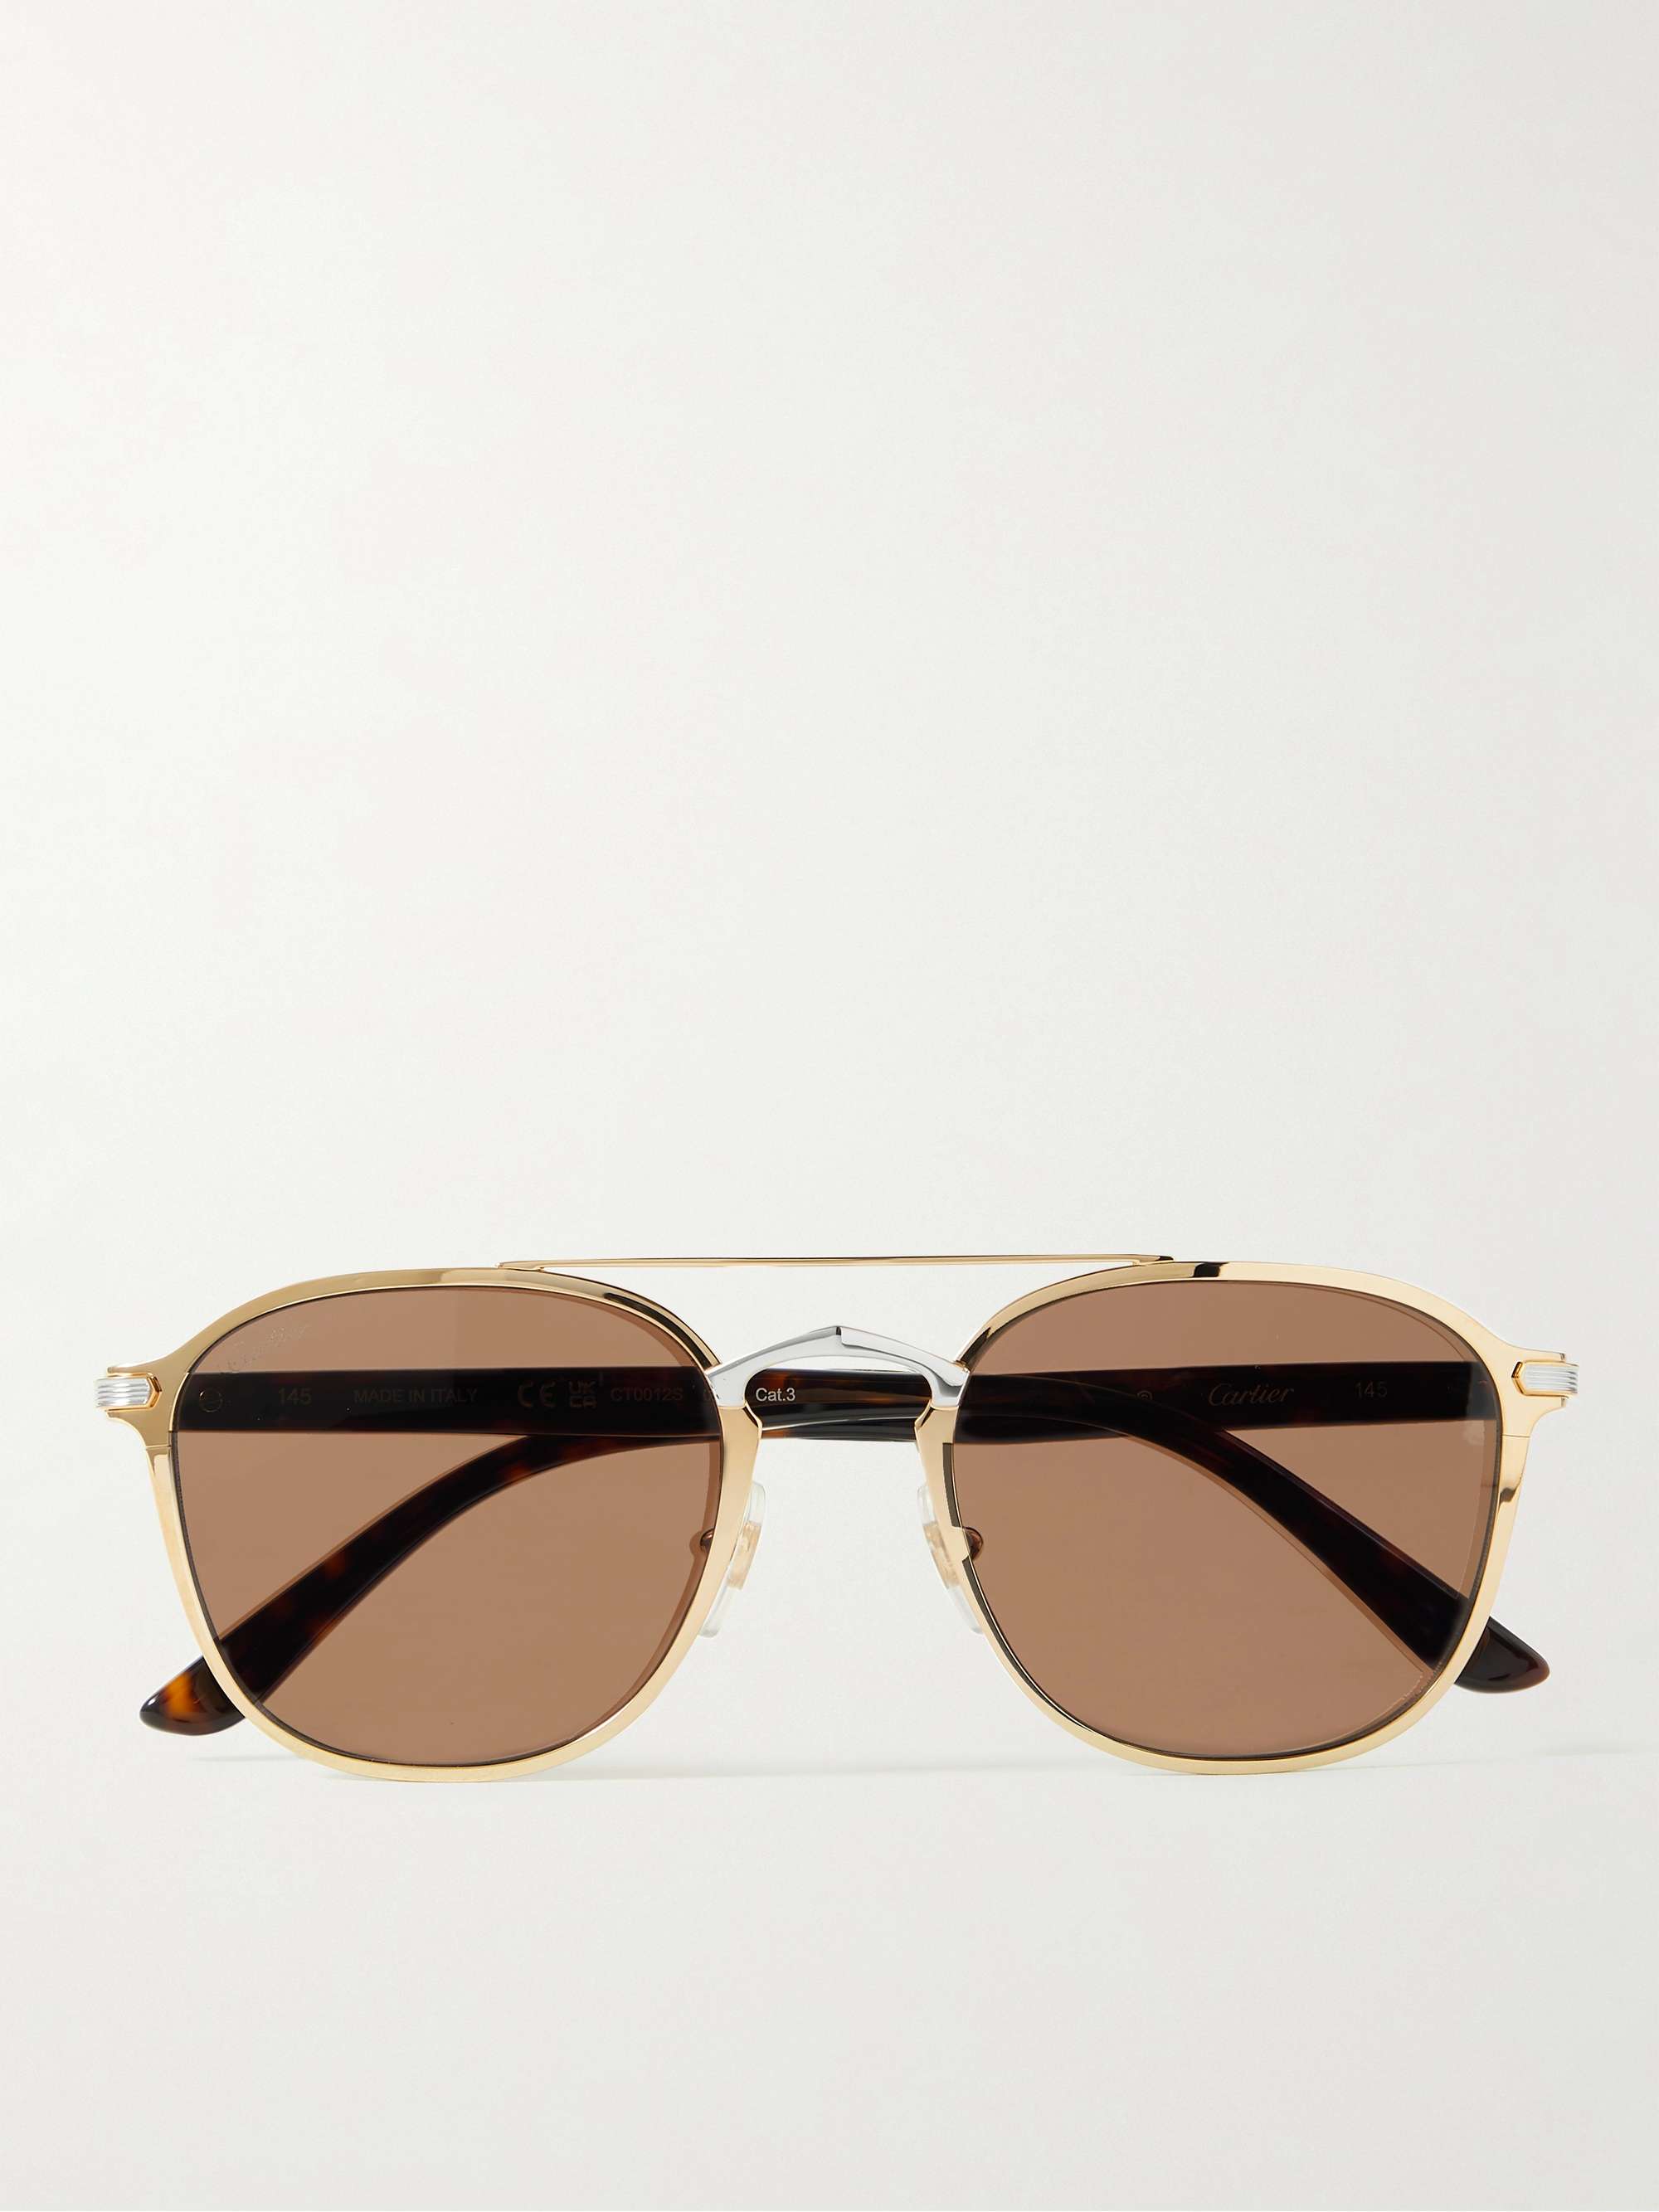 CARTIER EYEWEAR Aviator-Style Gold-Tone, Silver-Tone and Tortoiseshell Acetate Sunglasses